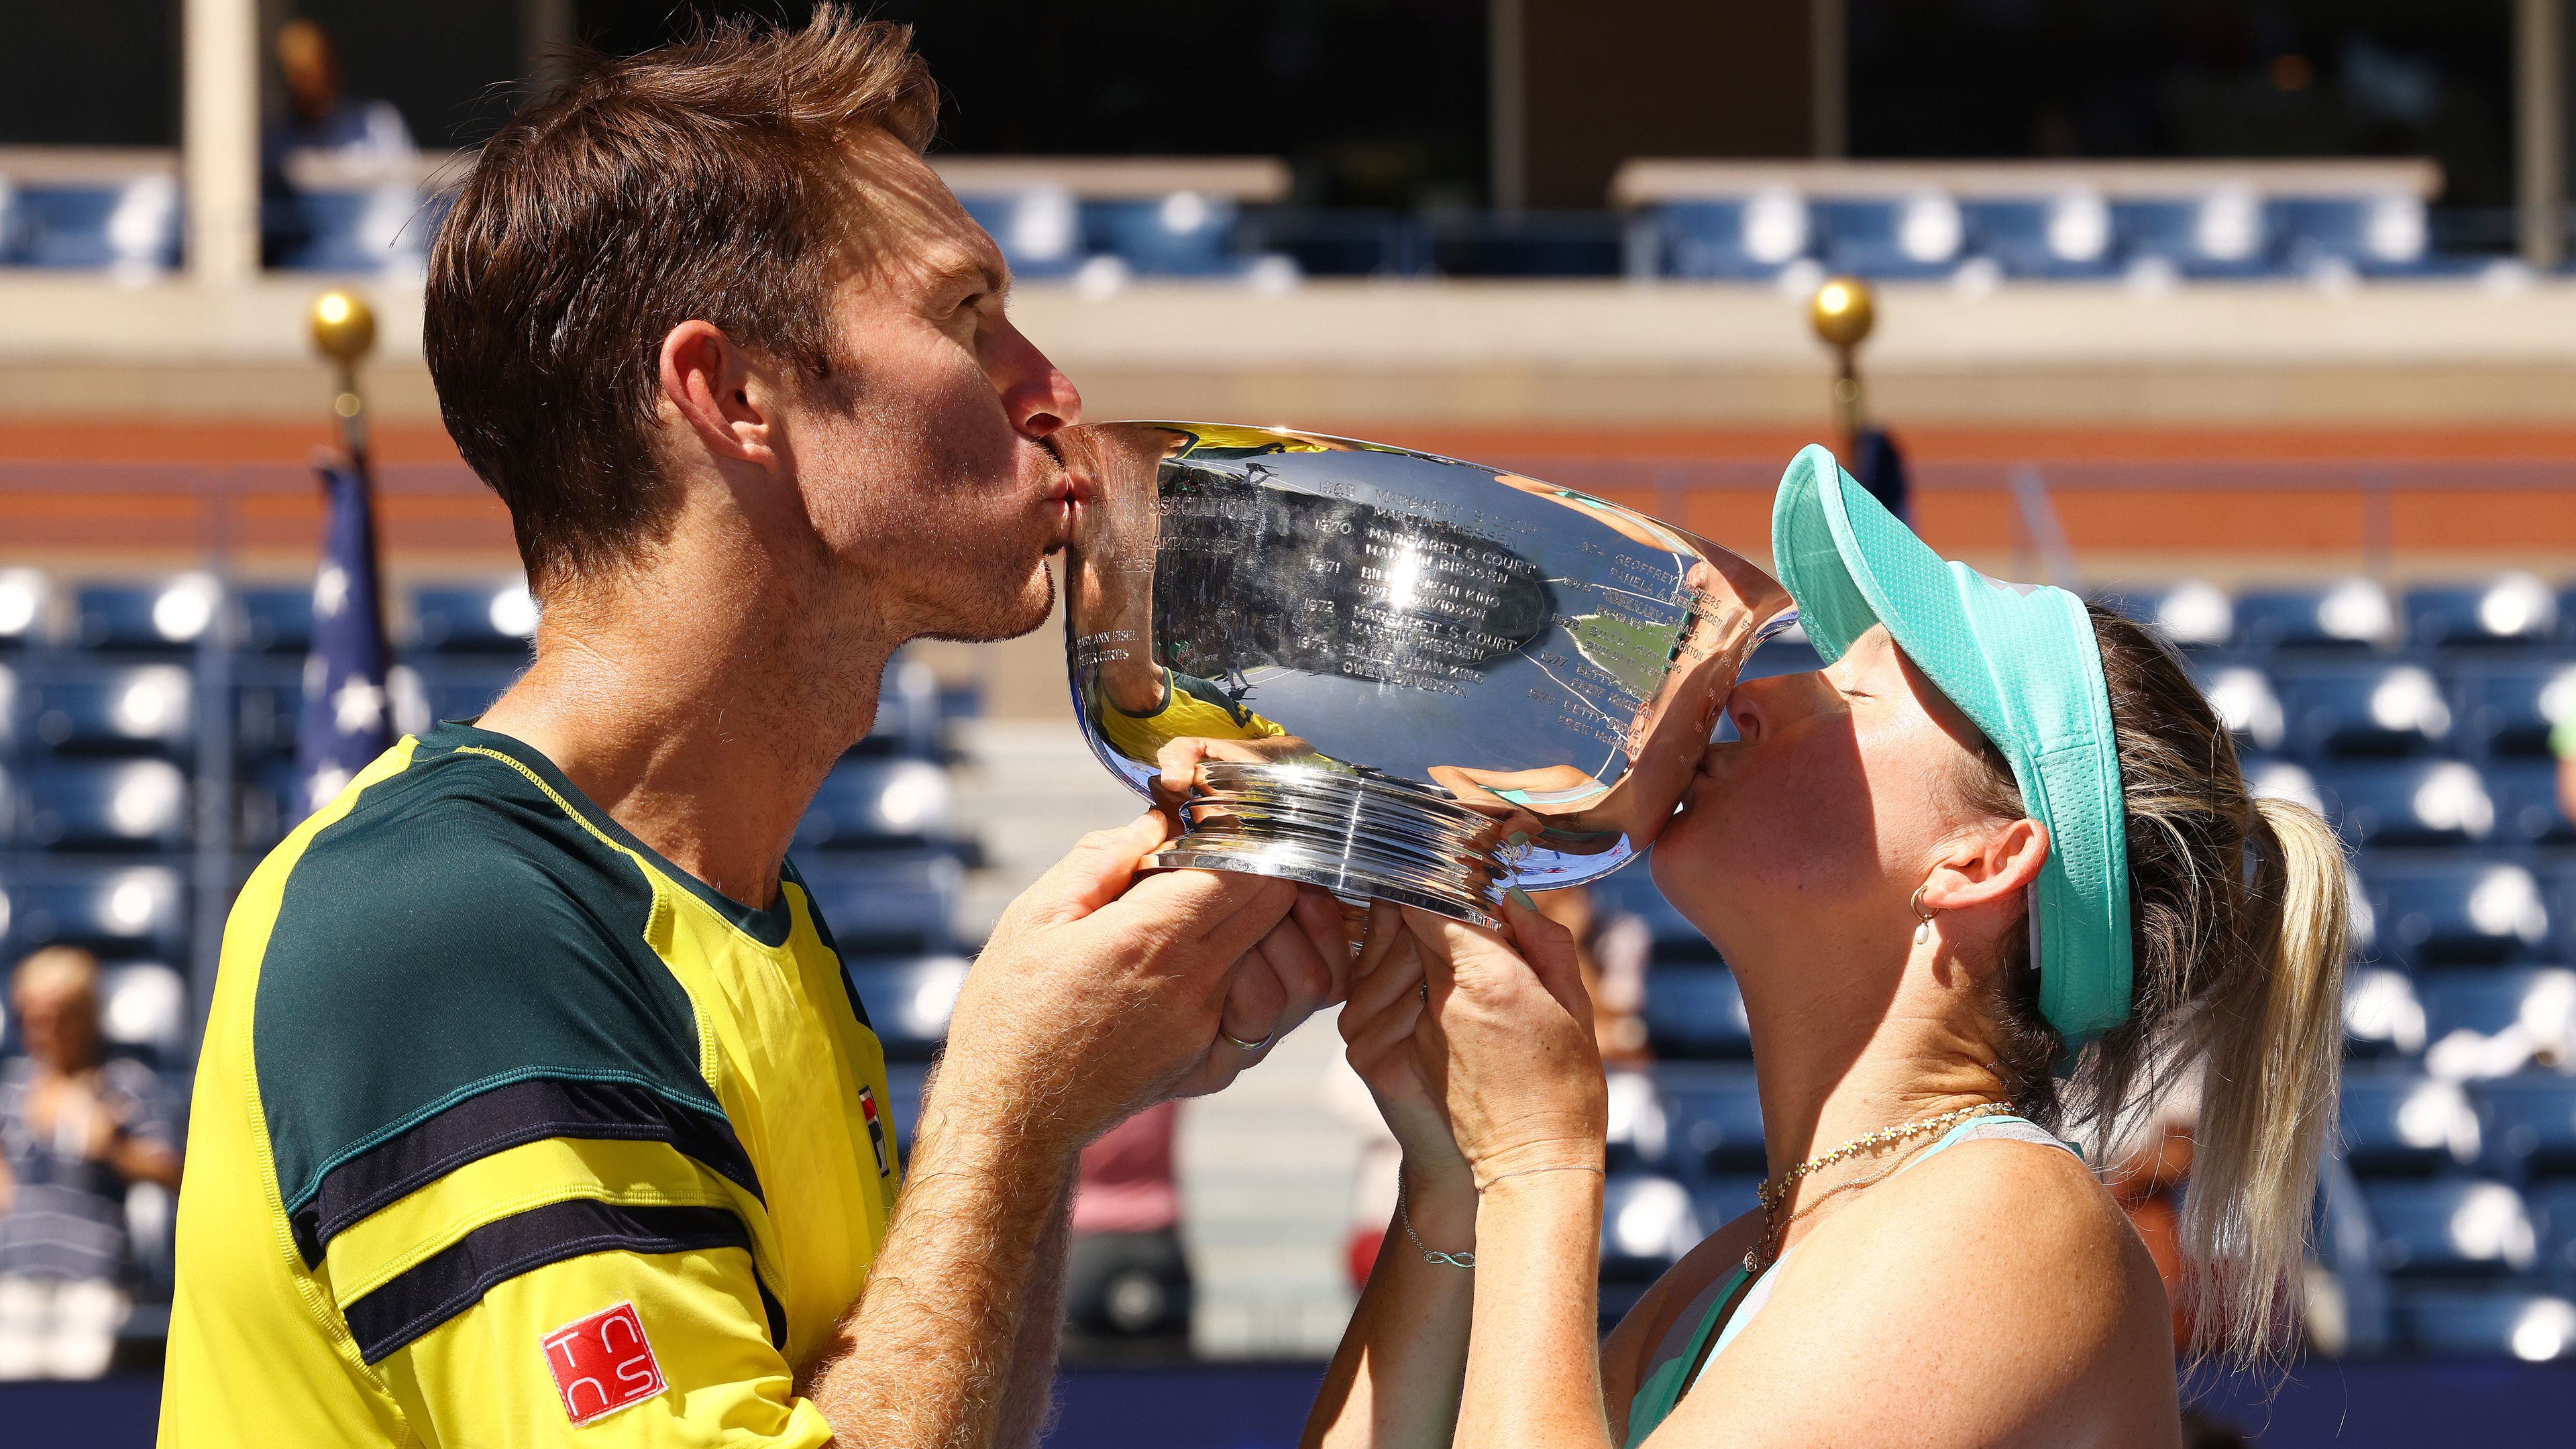 Aussie pair Storm Sanders and John Peers win US Open mixed doubles crown